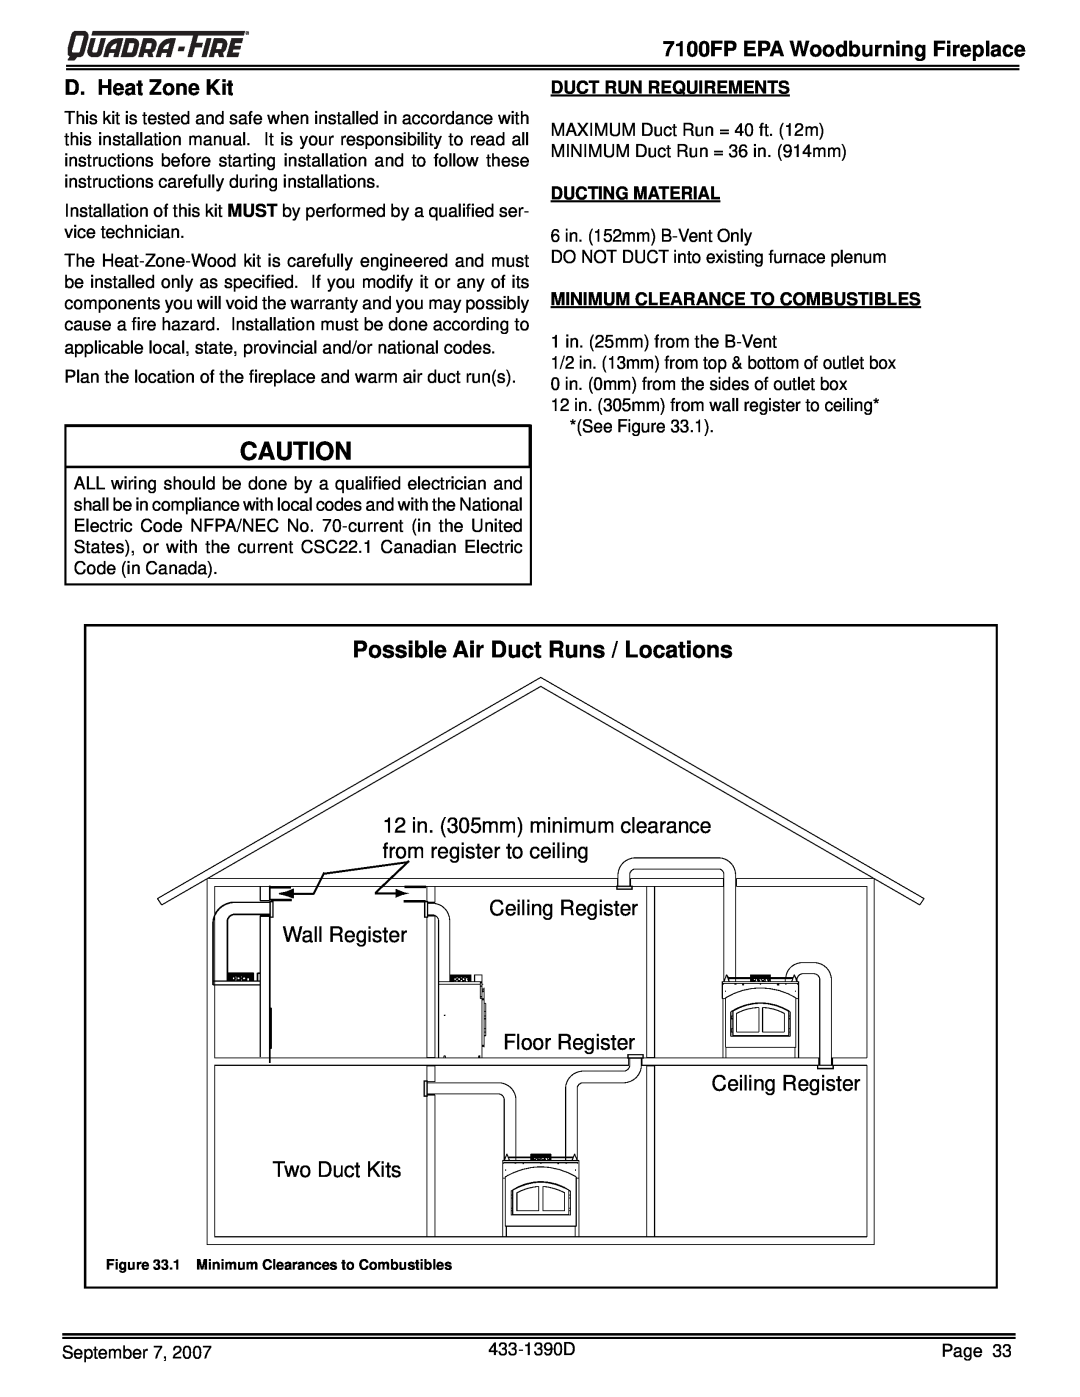 Quadra-Fire 7100FP-NL-B 7100FP EPA Woodburning Fireplace, D. Heat Zone Kit, Duct Run Requirements, Ducting Material 